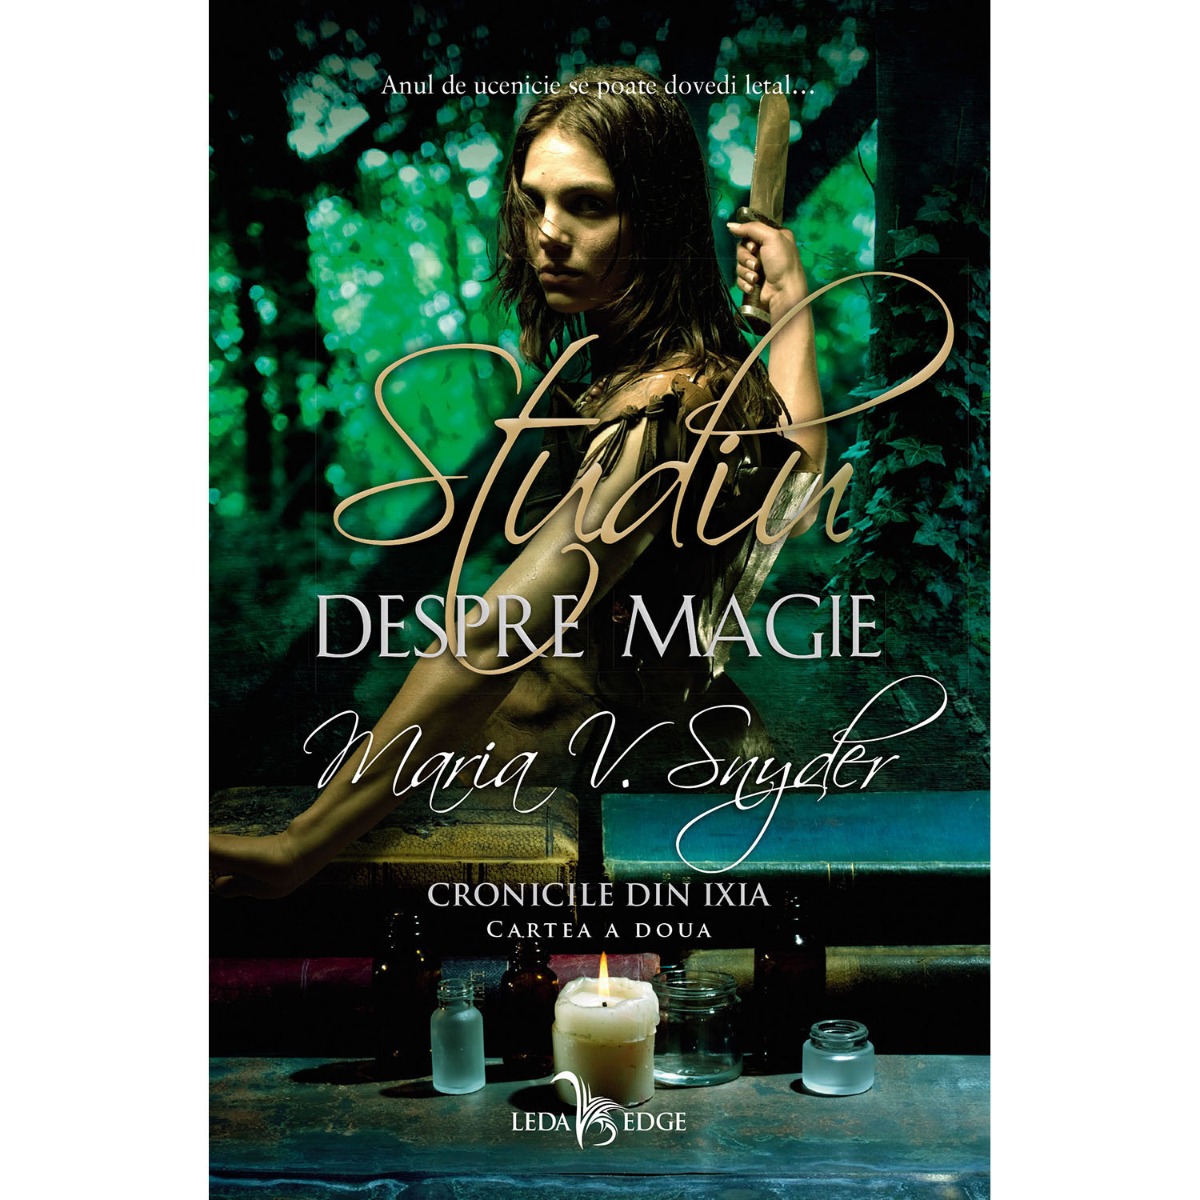 Carte Editura Corint, Cronicile din Ixia vol. 2 Studiu despre magie, Maria V. Snyder Corint